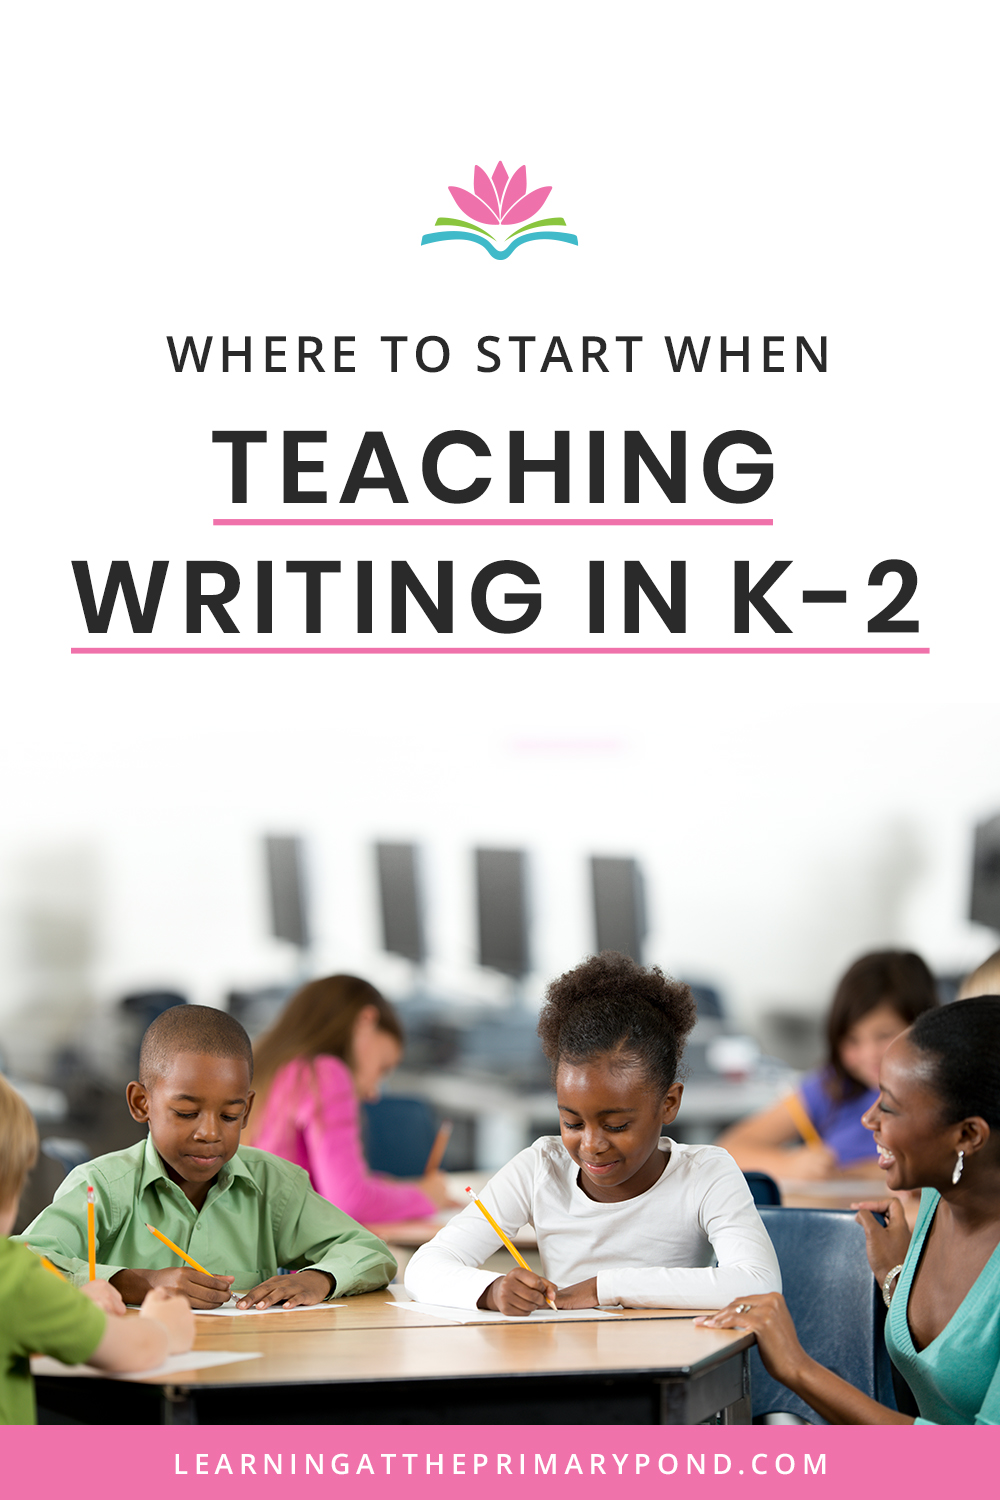 Where To Start When Teaching Writing In K-2